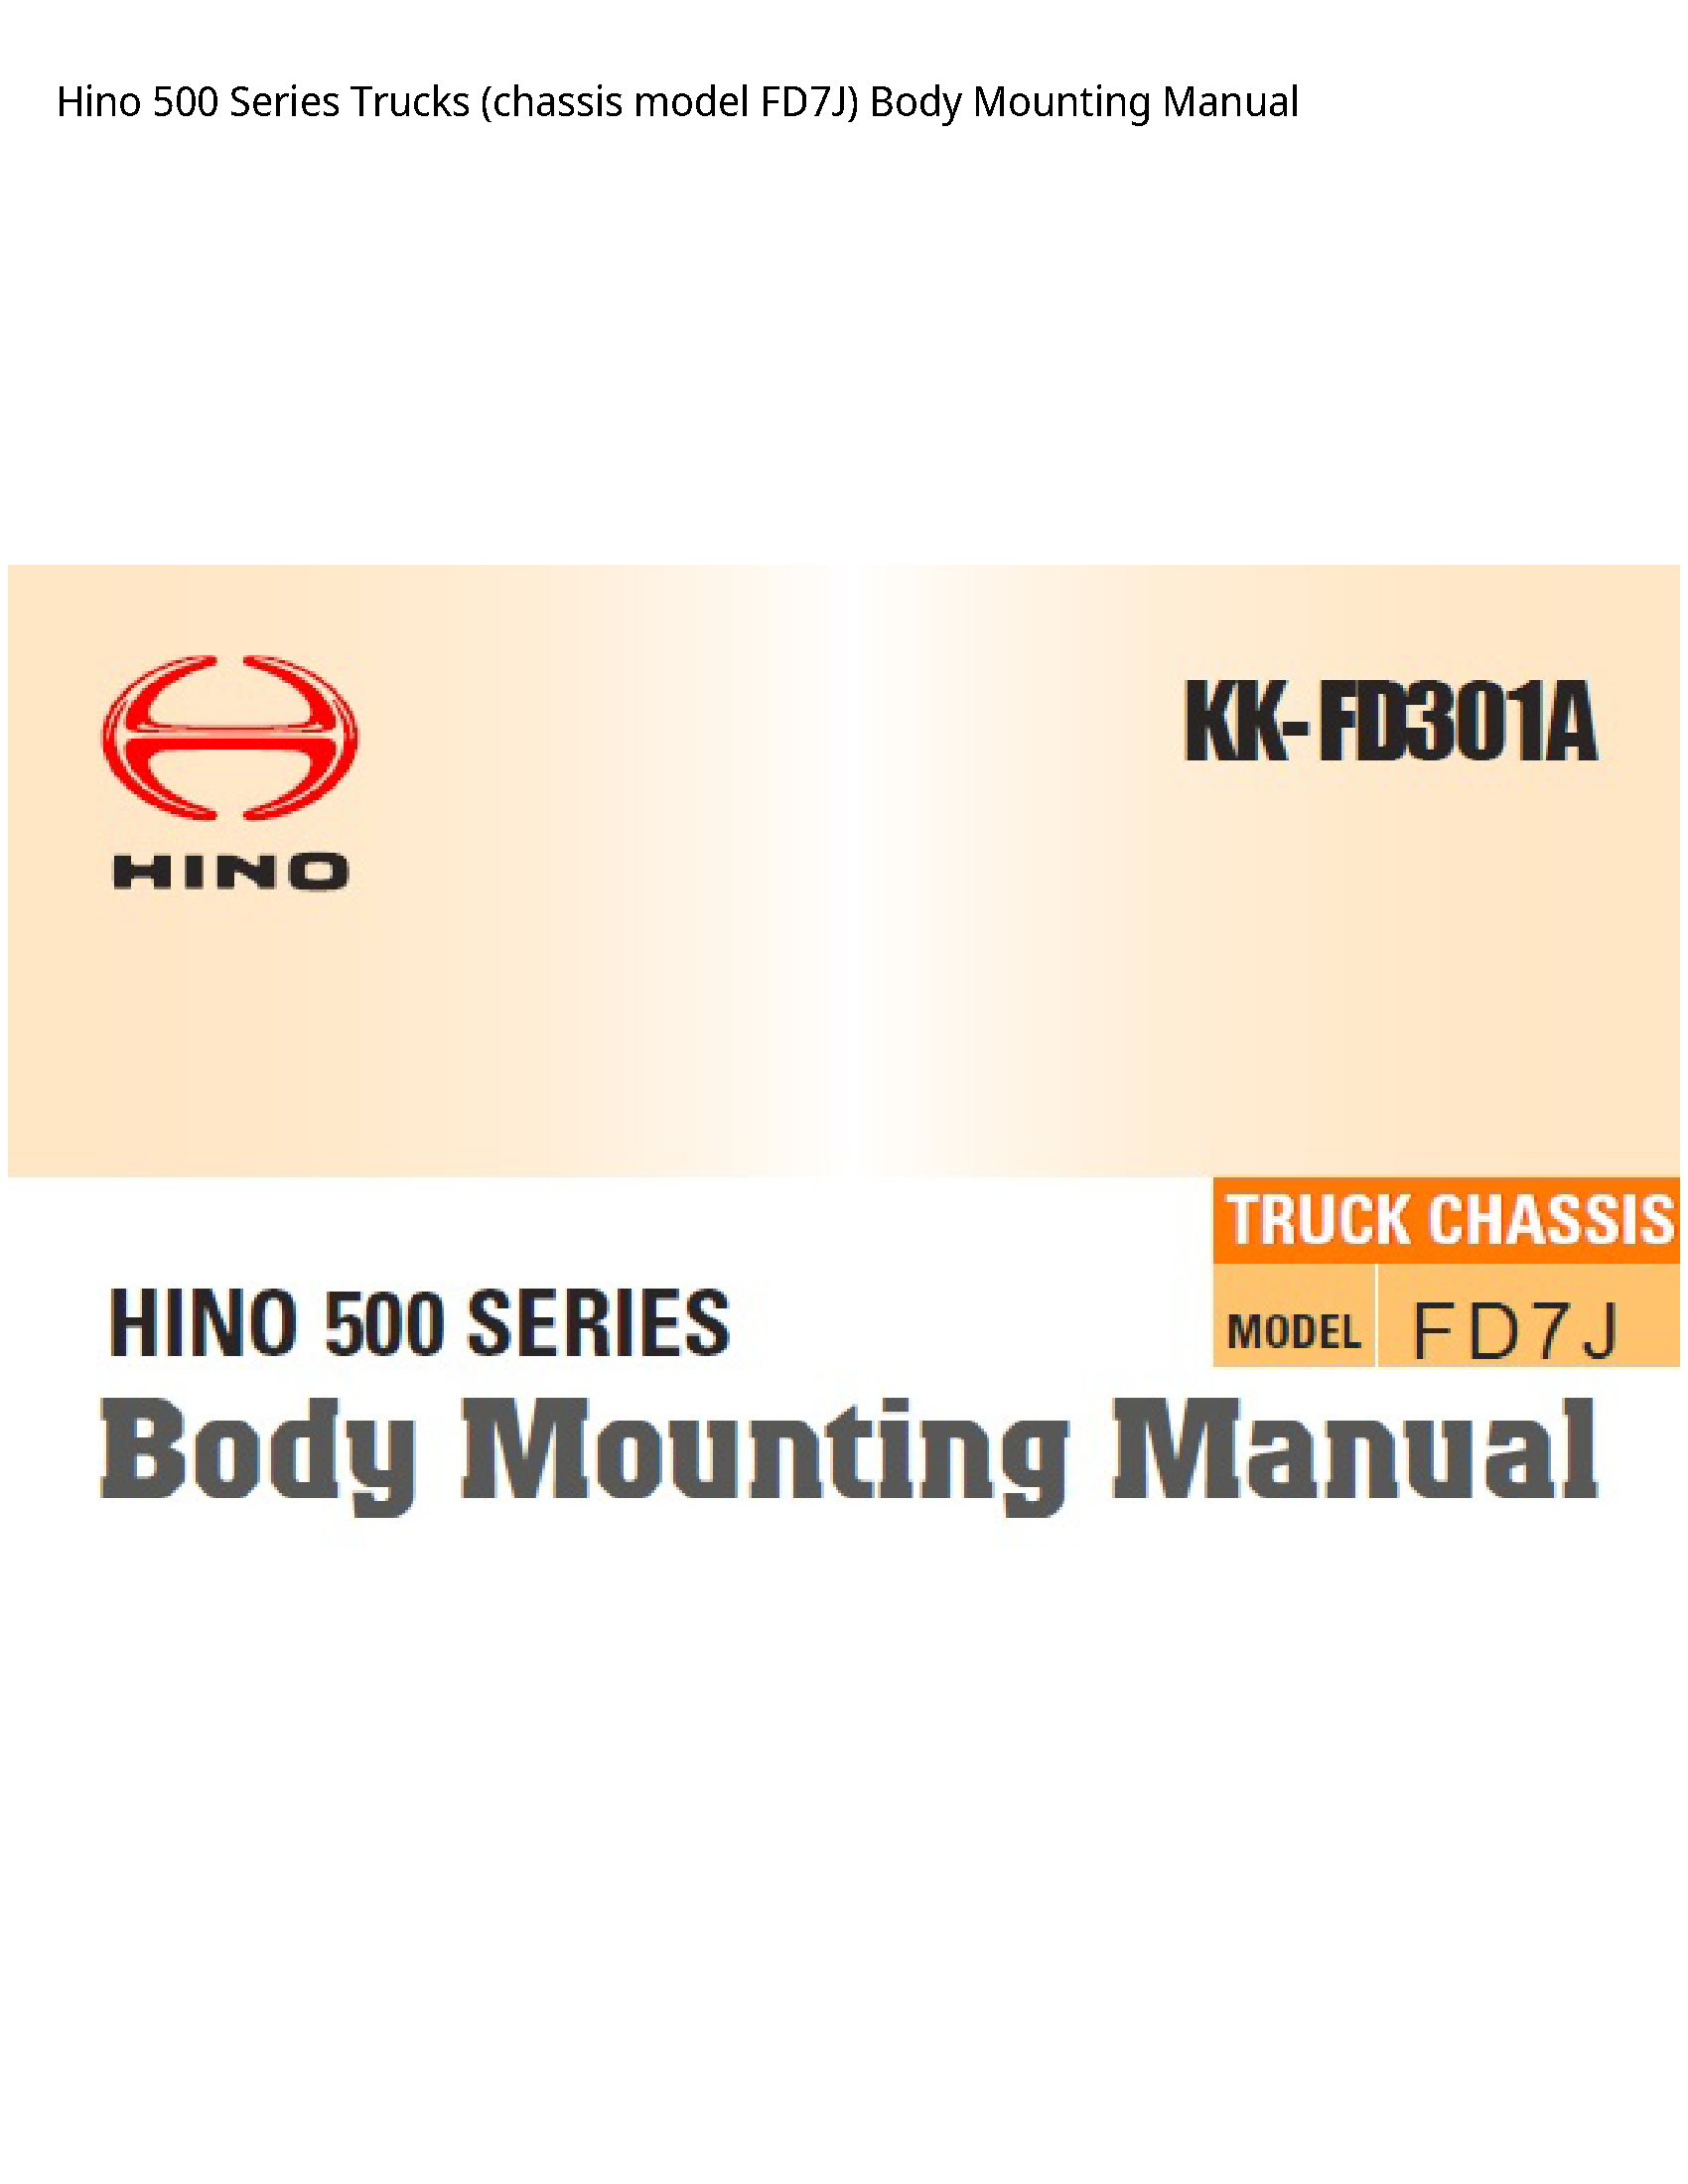 Hino 500 Series Trucks chassis model Body Mounting manual